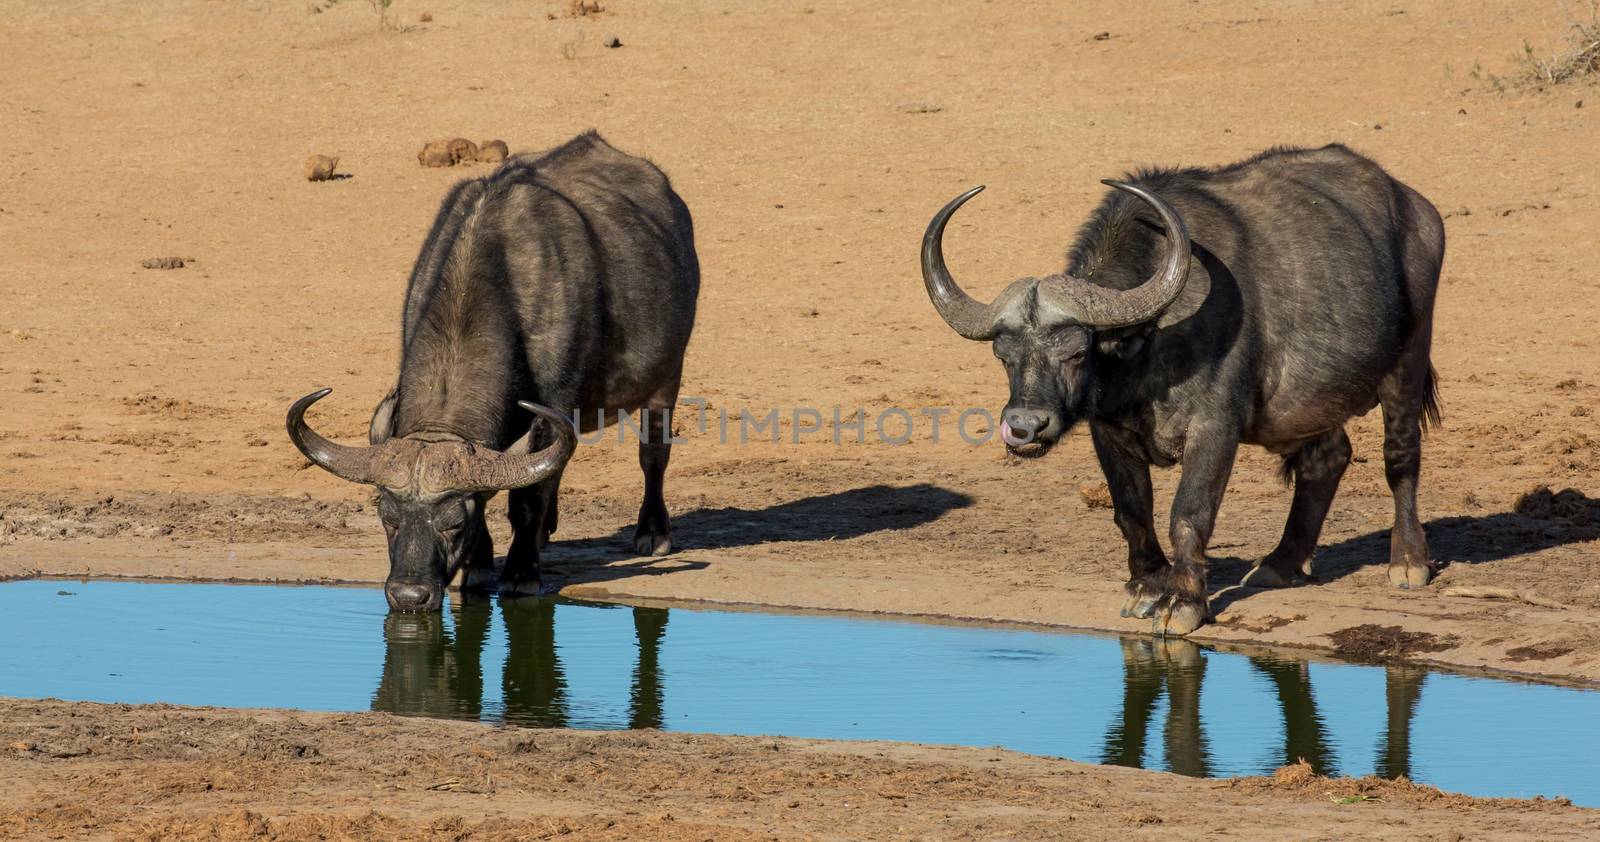 Buffalo Bulls with Large Horns at Waterhole by fouroaks